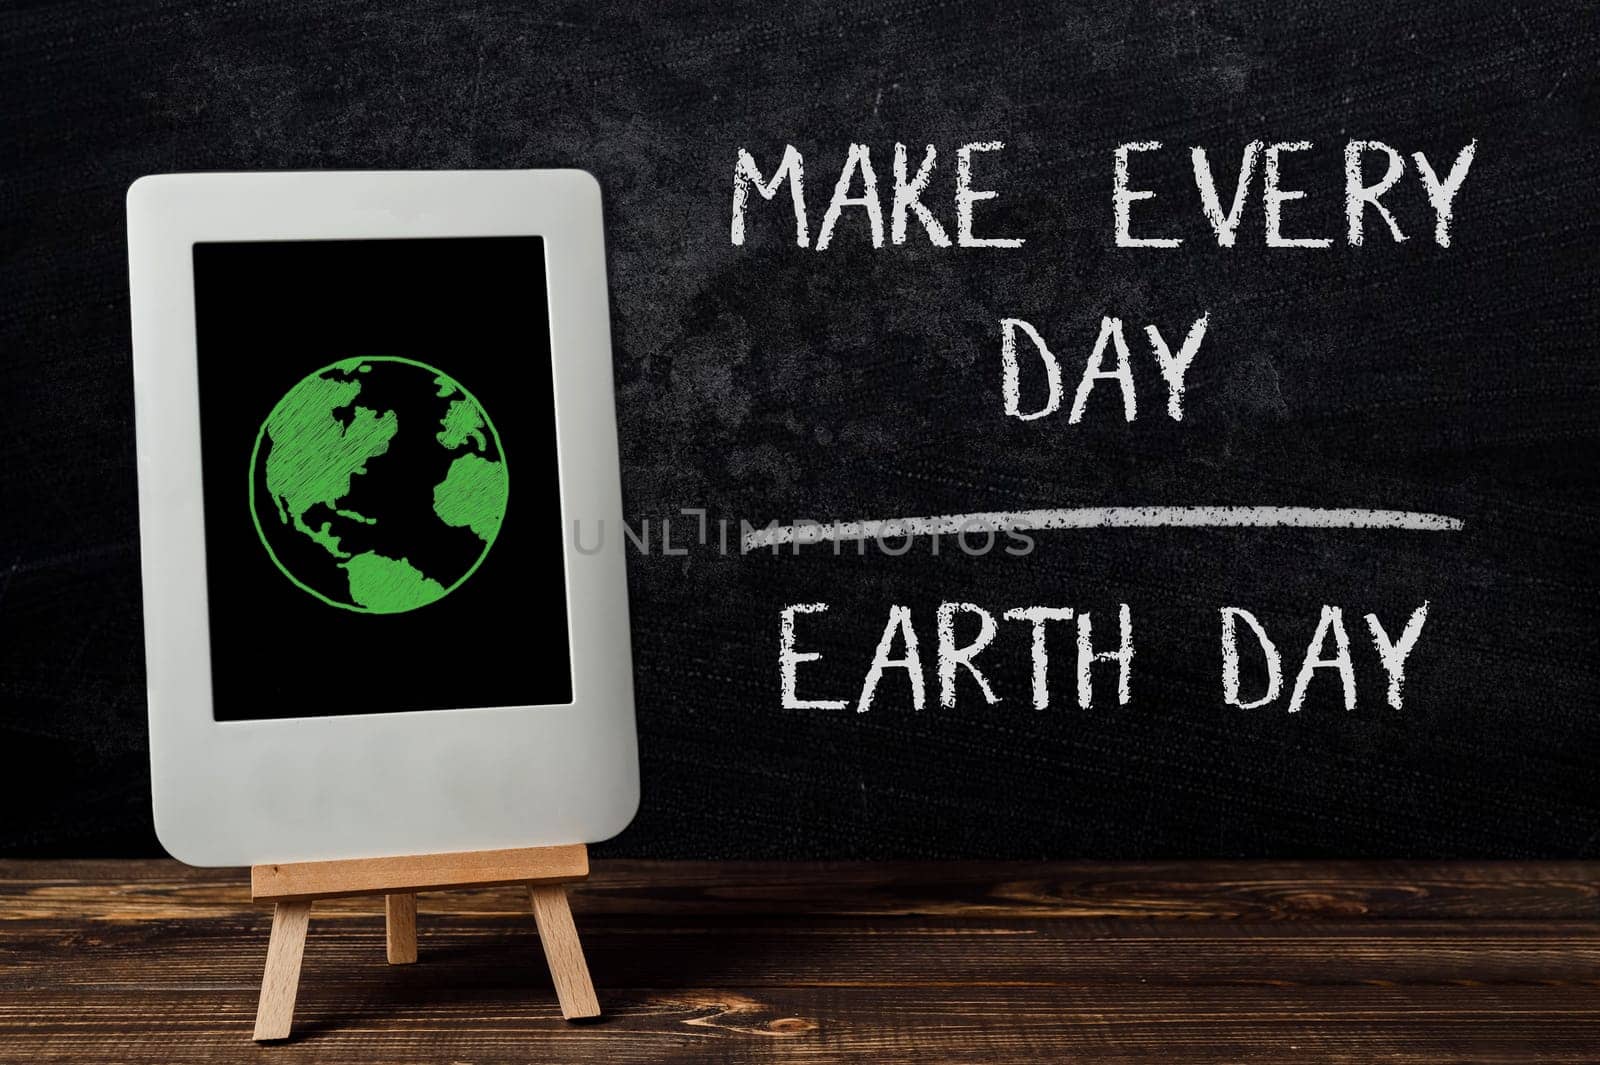 Make every day Earth Day by Alla_Morozova93